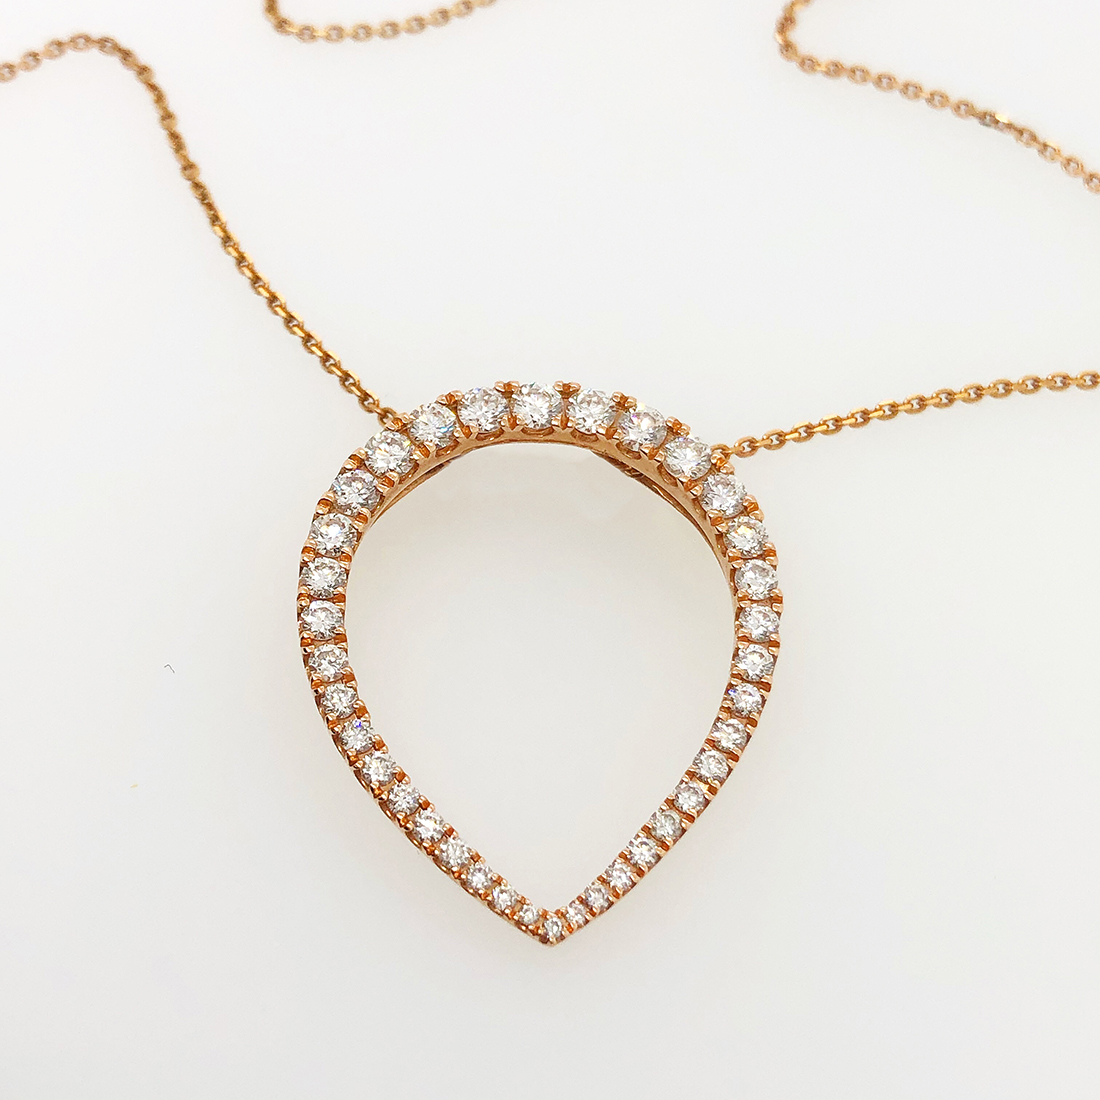 NEW necklace pendant fashion jewelry sylvie